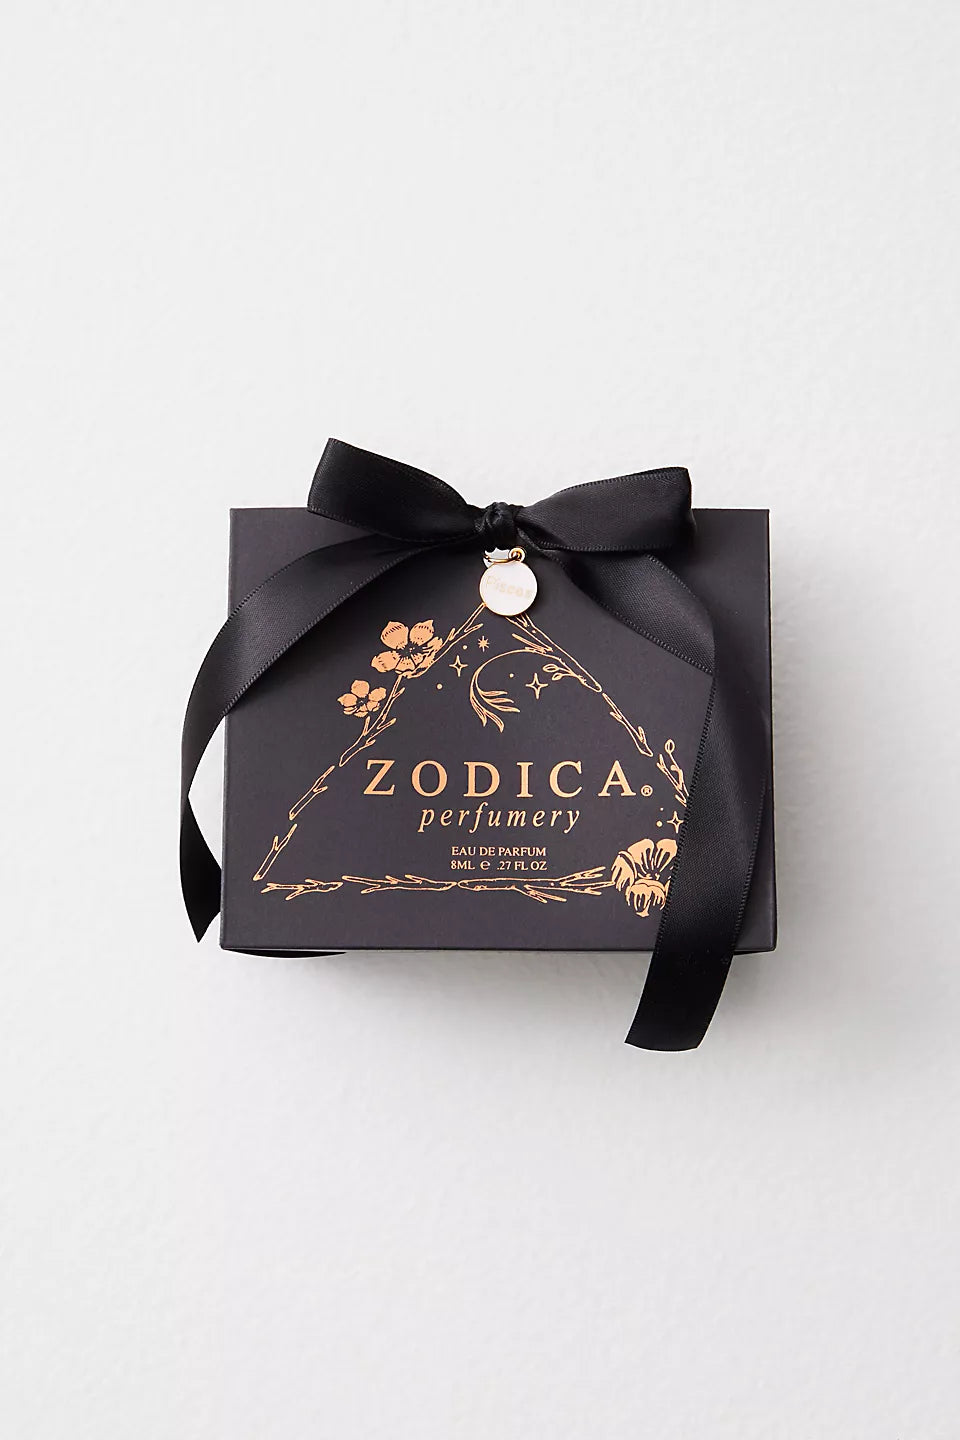 Zodica Twist & Spritz Perfume Gift Set